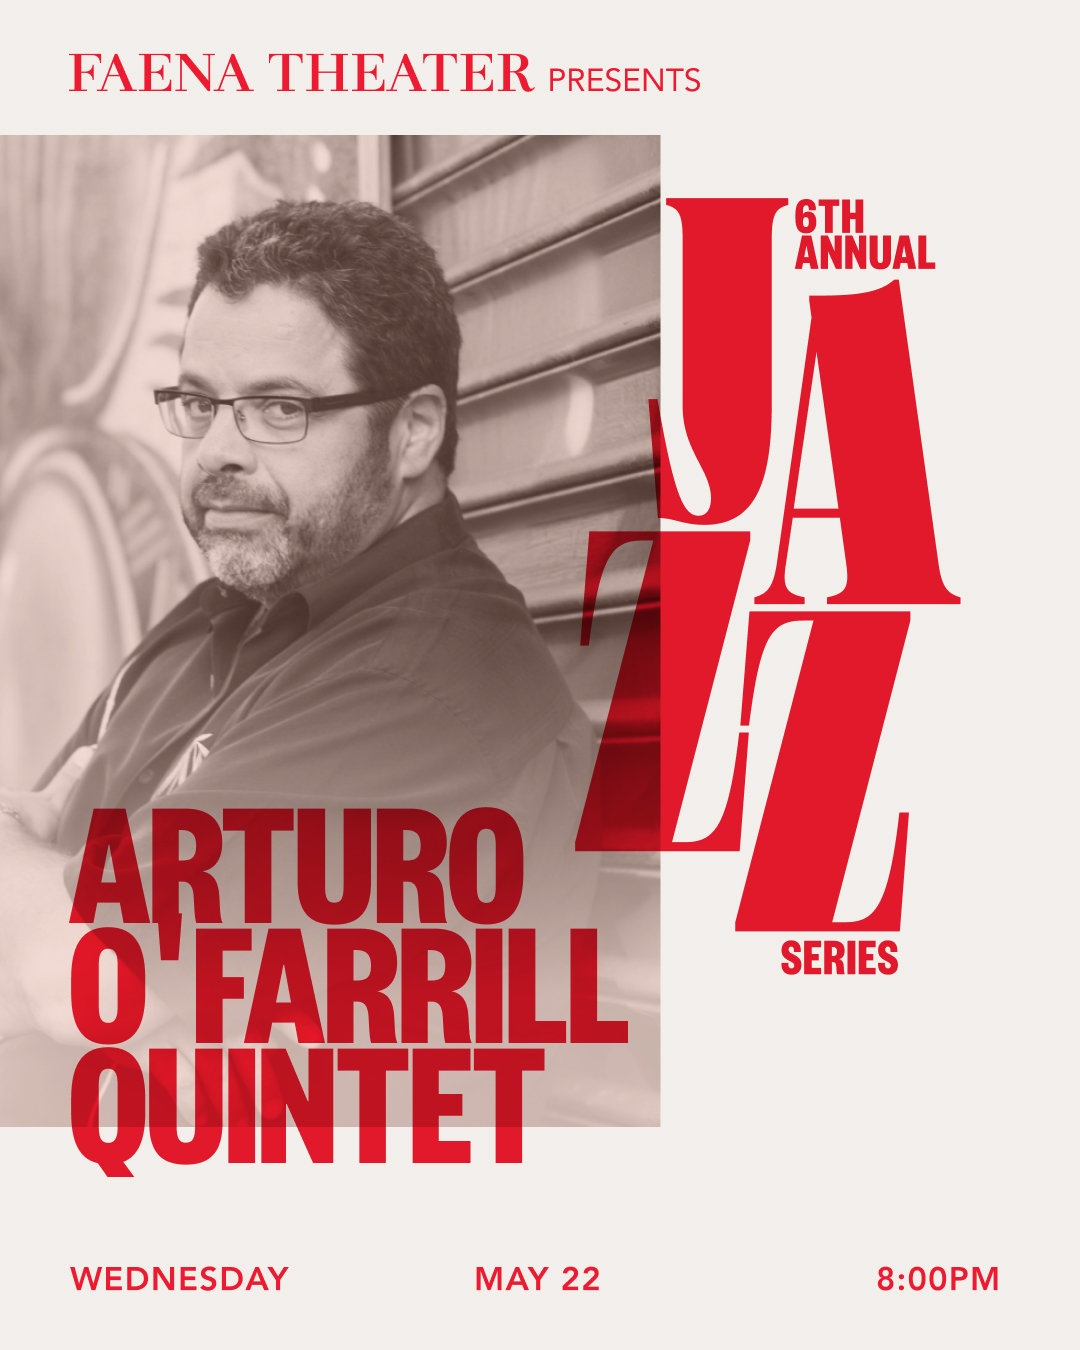 Arturo O'Farrill Quintet